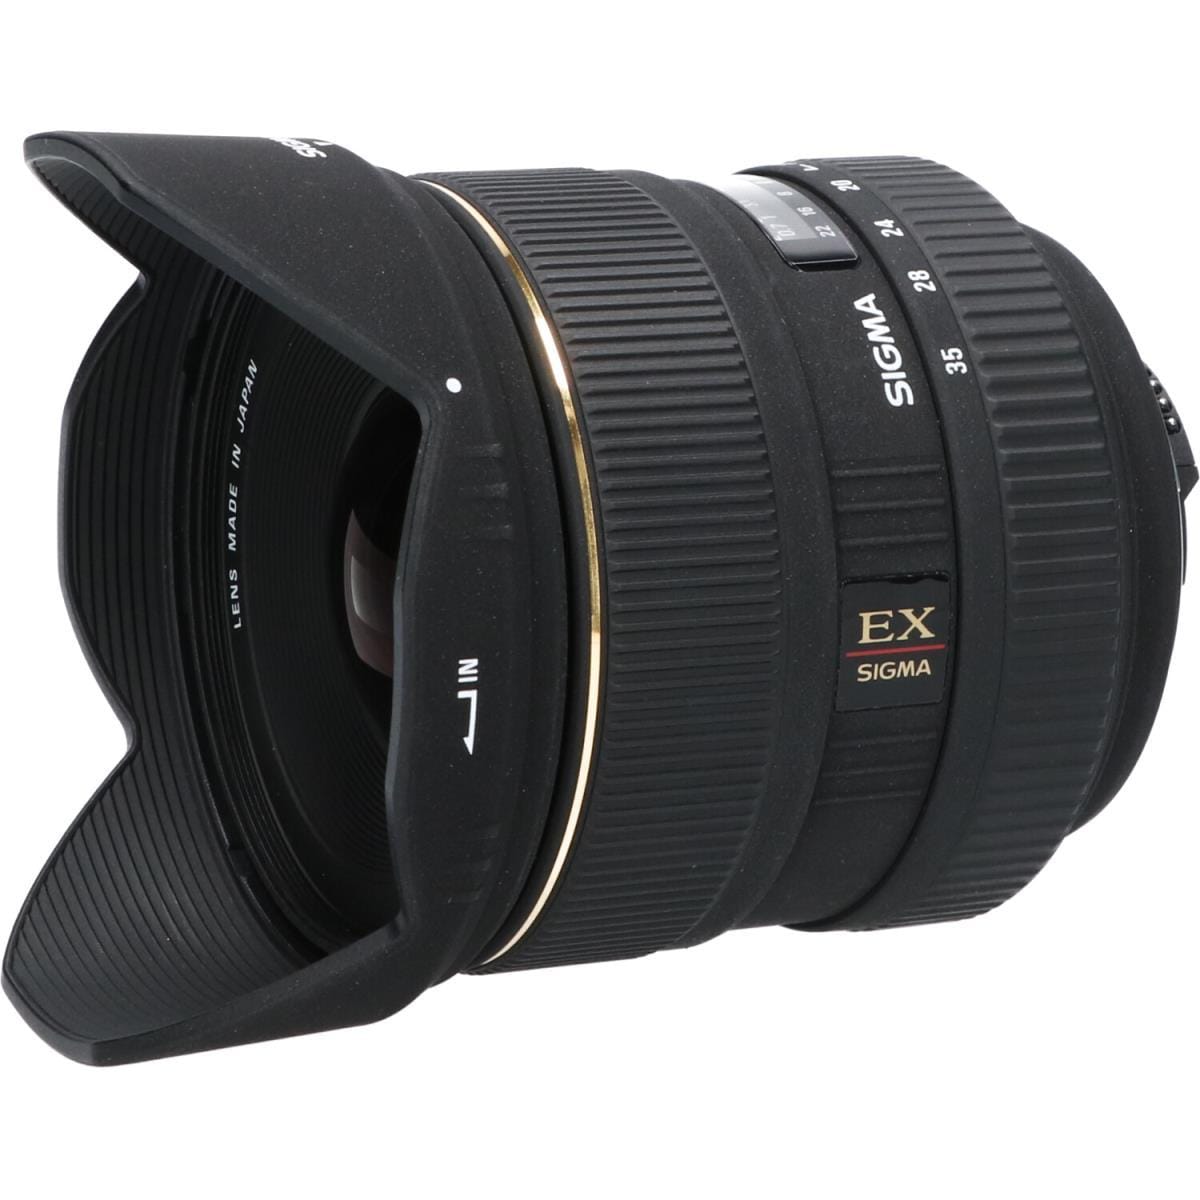 SIGMA Nikon 17-35mm F2.8-4EX DG HSM